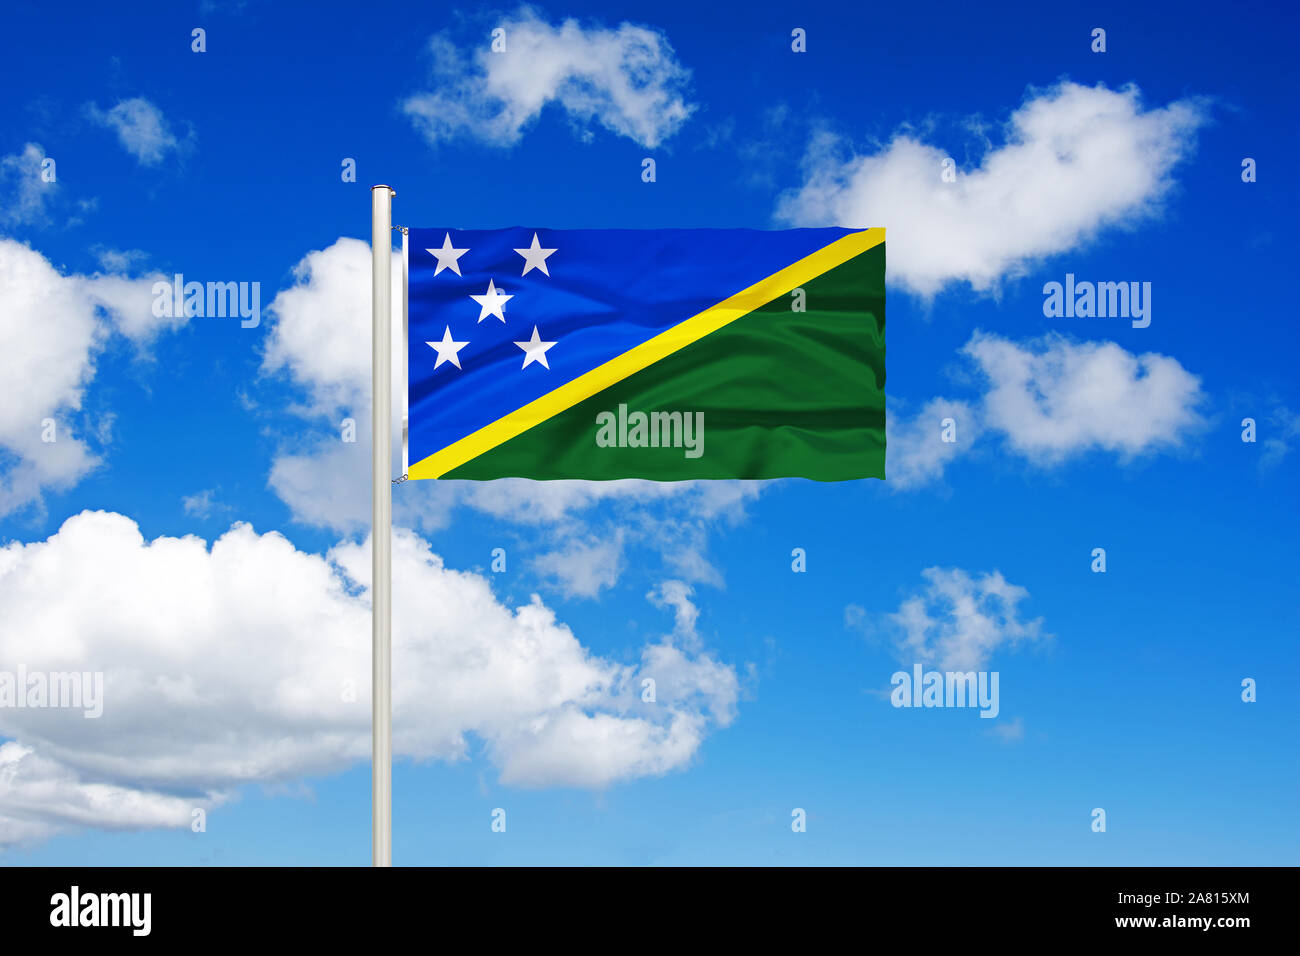 Nationalfahne Nationalflagge, Fahne Flagge,,,,, Südpazifik Inselstaat Salomonen, Südsee, Cumulus Wolken vor blauen Himmel, Banque D'Images